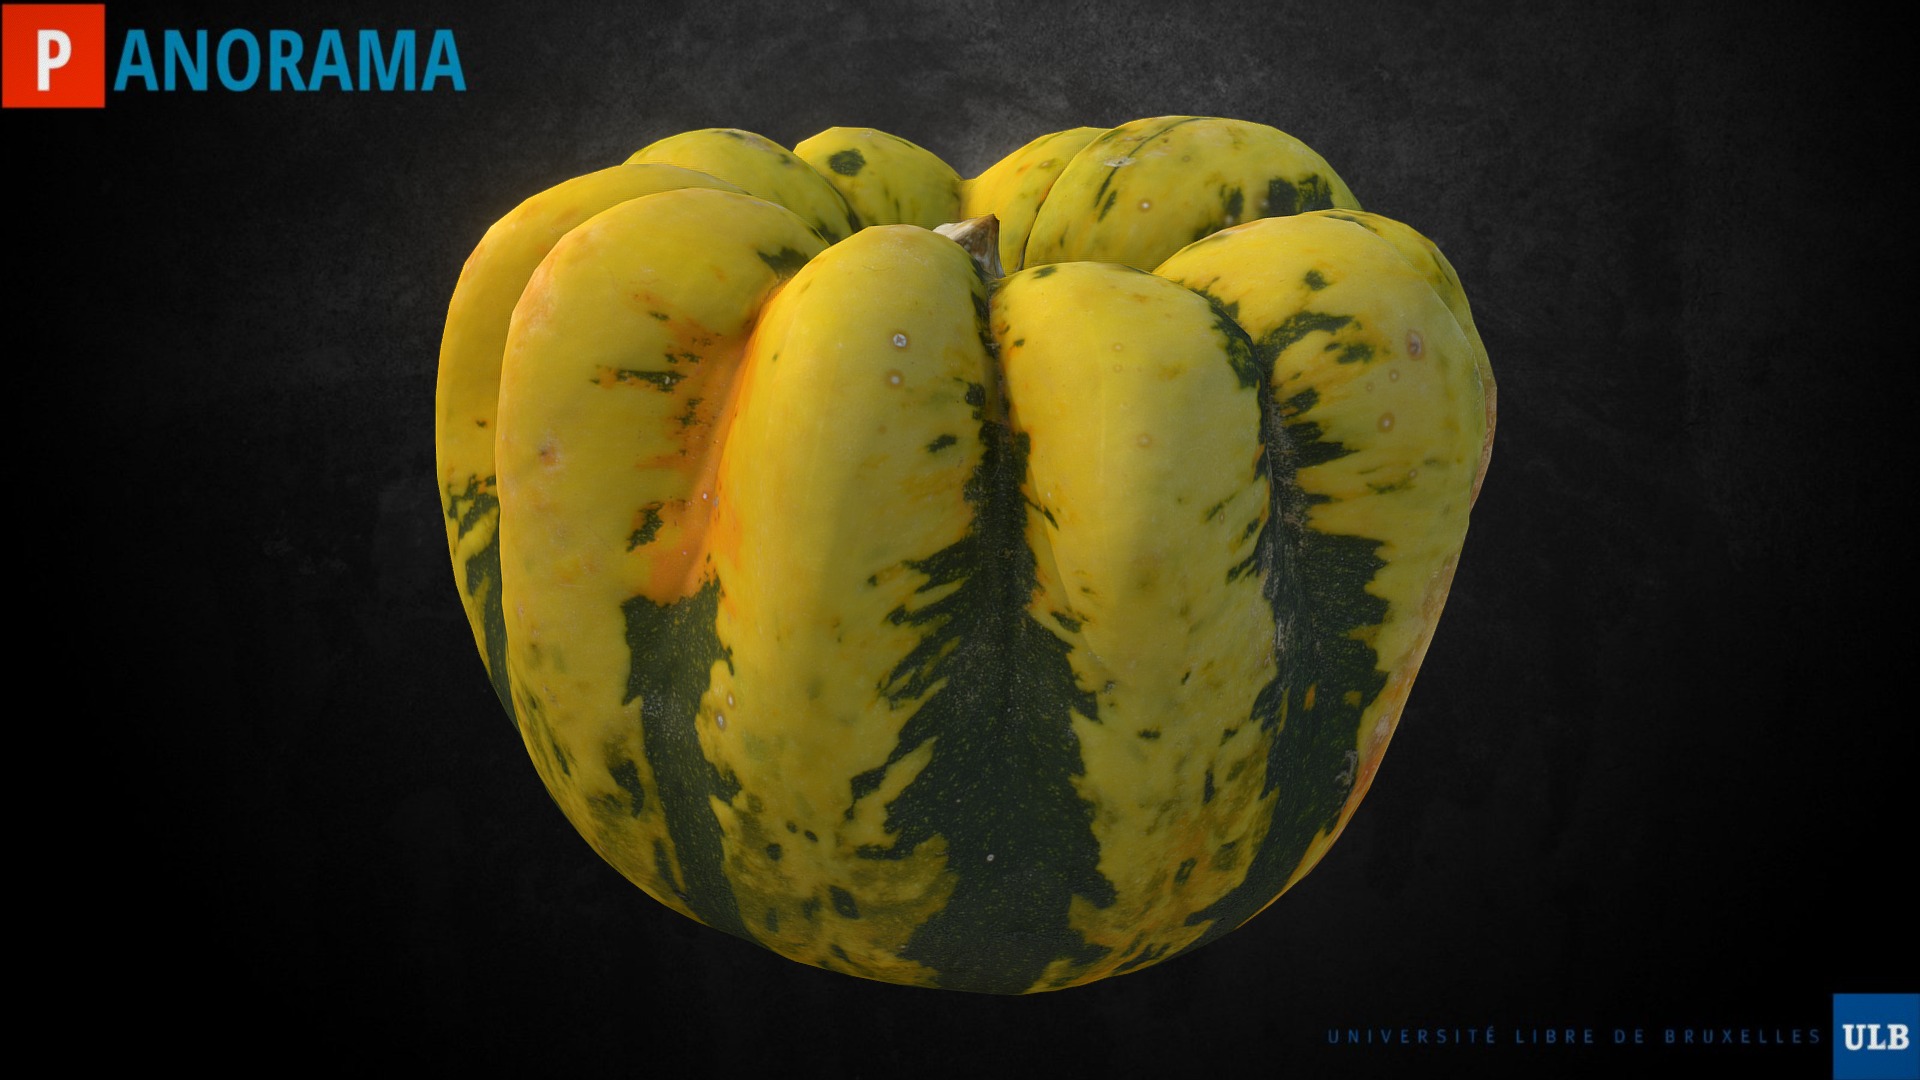 3D model Cucurbitacée #2 - This is a 3D model of the Cucurbitacée #2. The 3D model is about a group of bananas.